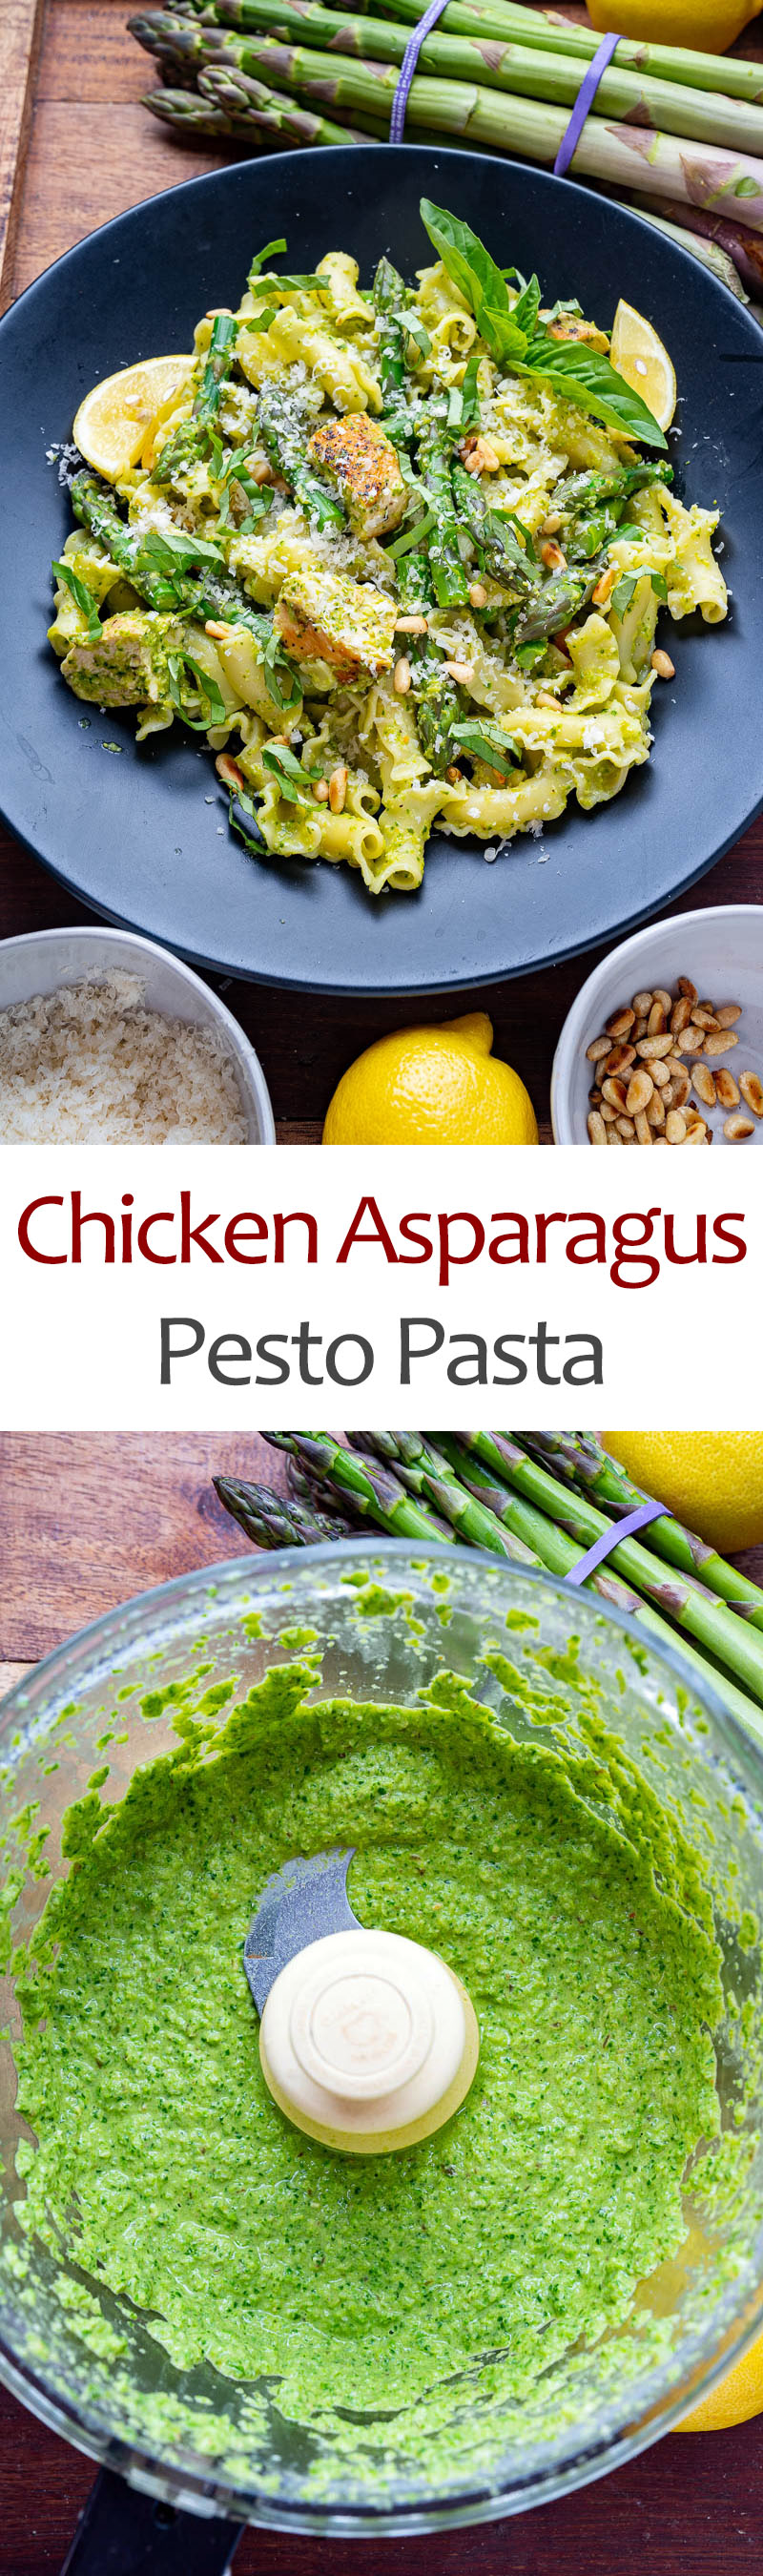 Chicken Asparagus Pesto Pasta